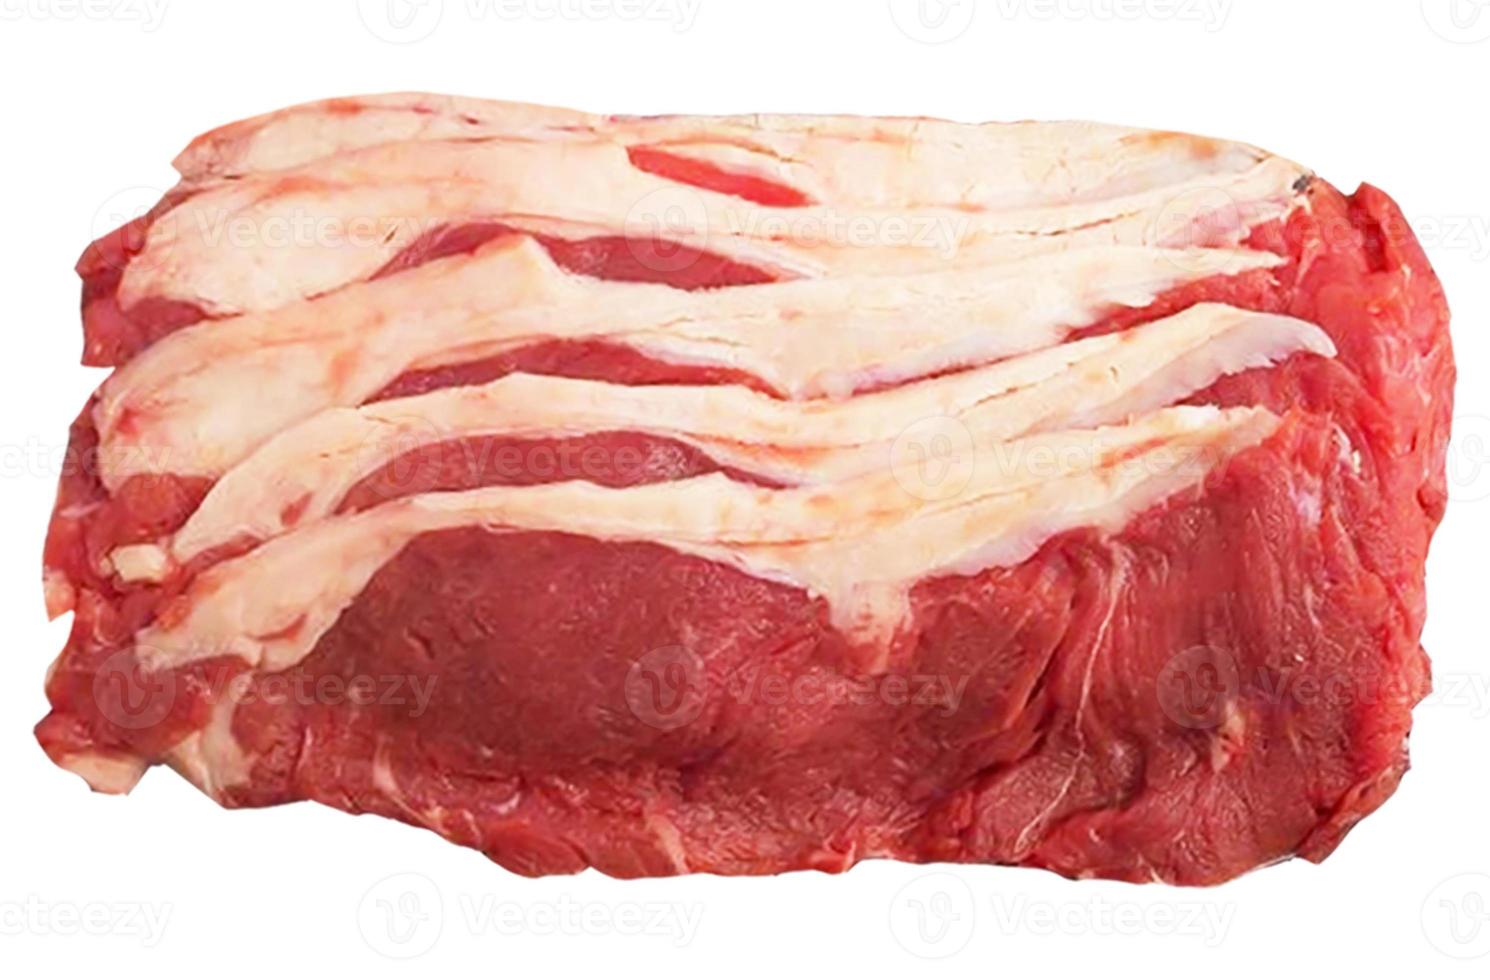 Rauw vlees rundvlees entrecote shabu shabu geïsoleerd op witte achtergrond foto